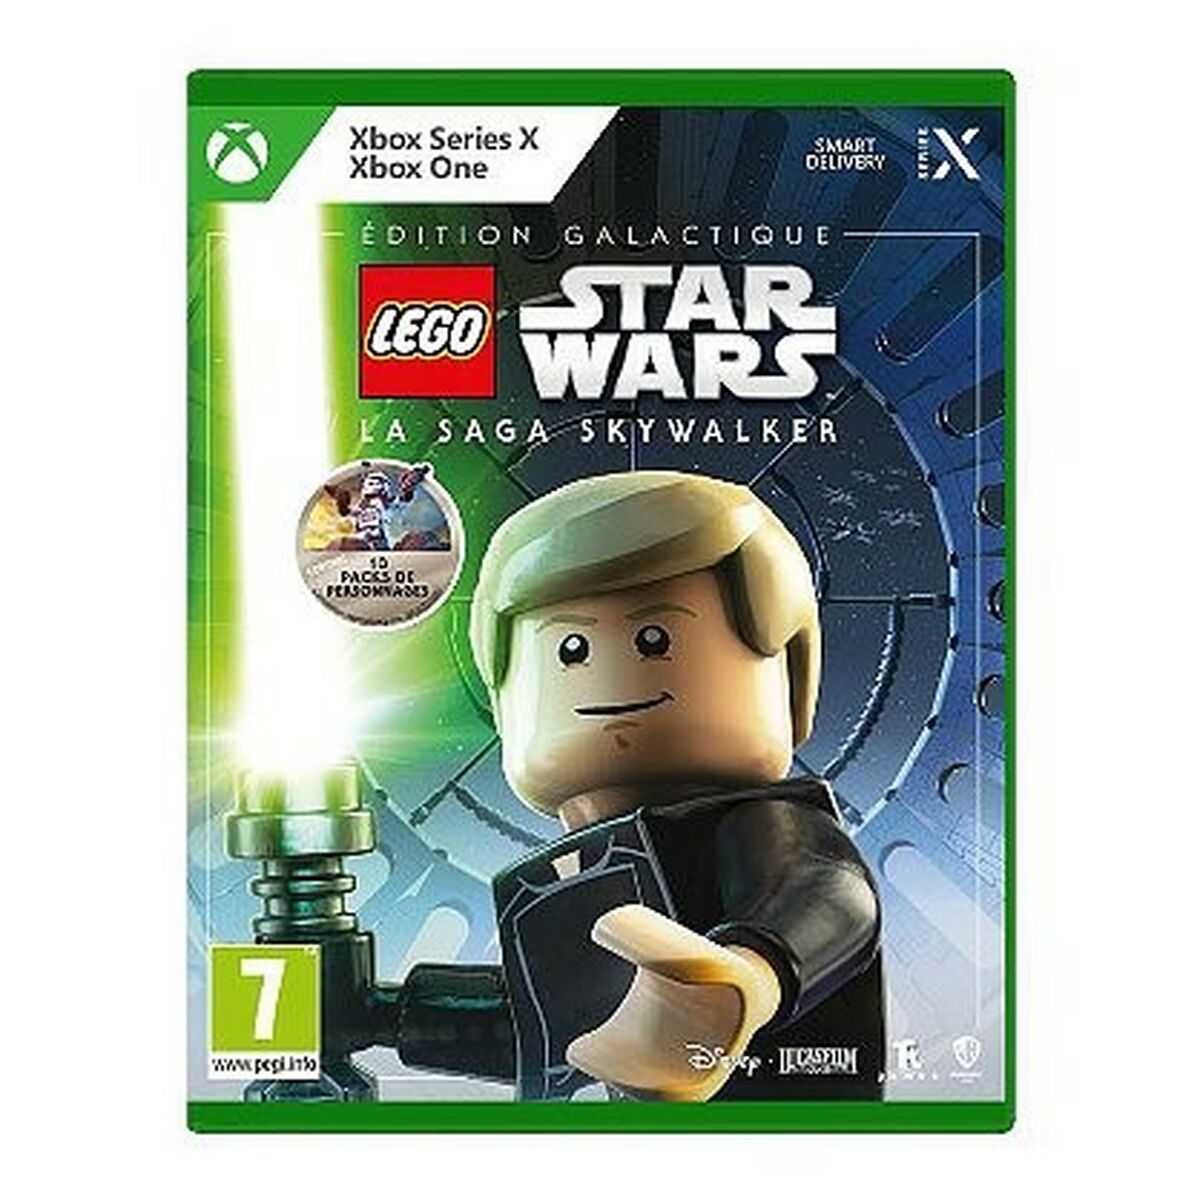 Jeu vidéo Xbox One Warner Games Star Wars: Skywalker saga édition galactique